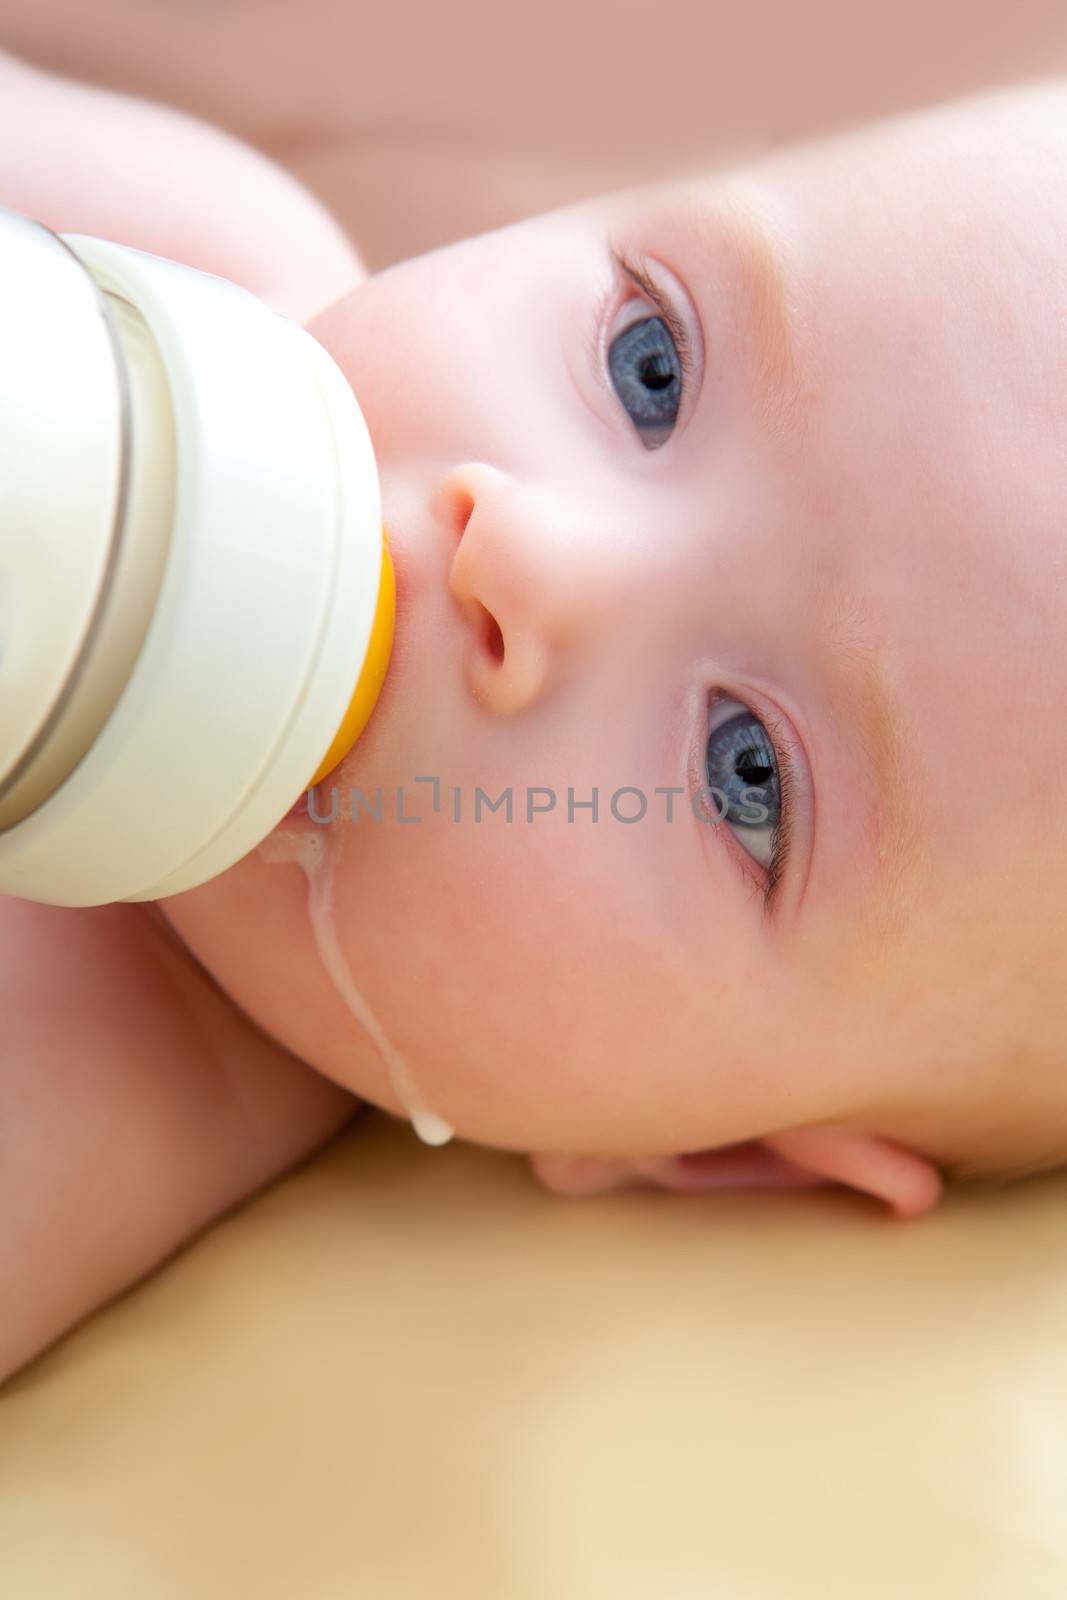 Bond little baby blue eyes drinking bottle milk by lunamarina